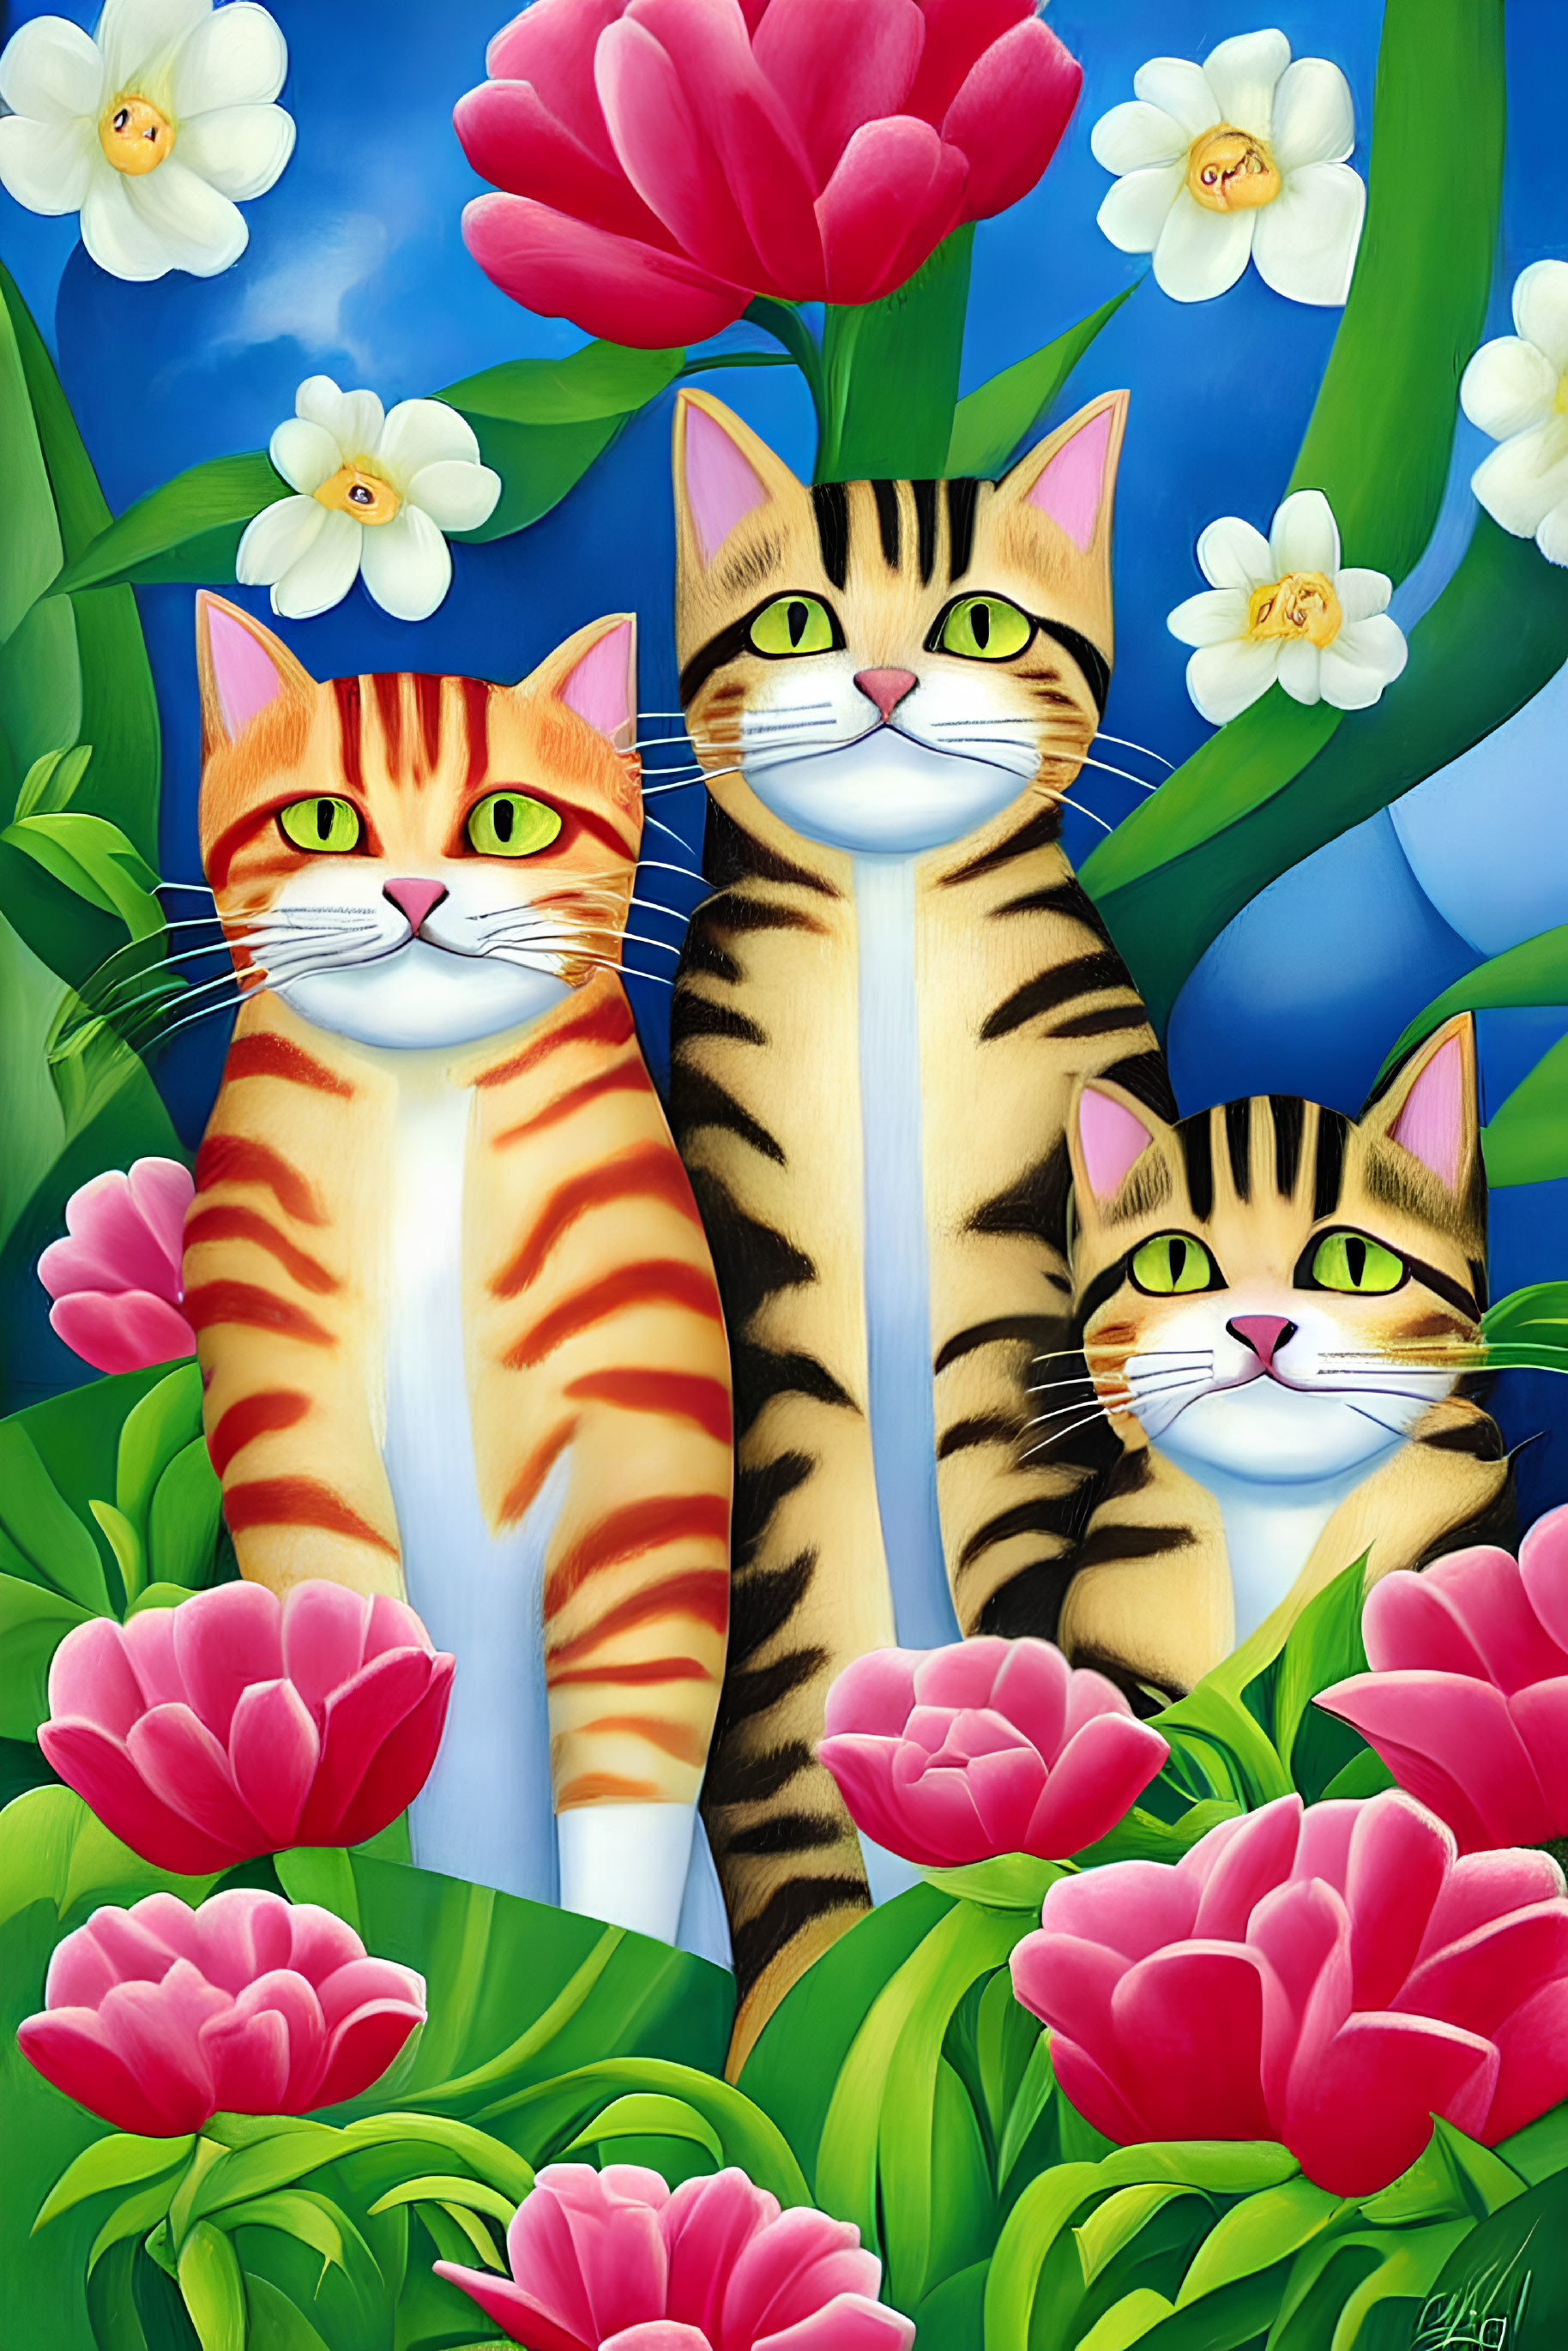 Colorful Cartoon Cats in Lush Garden Scene